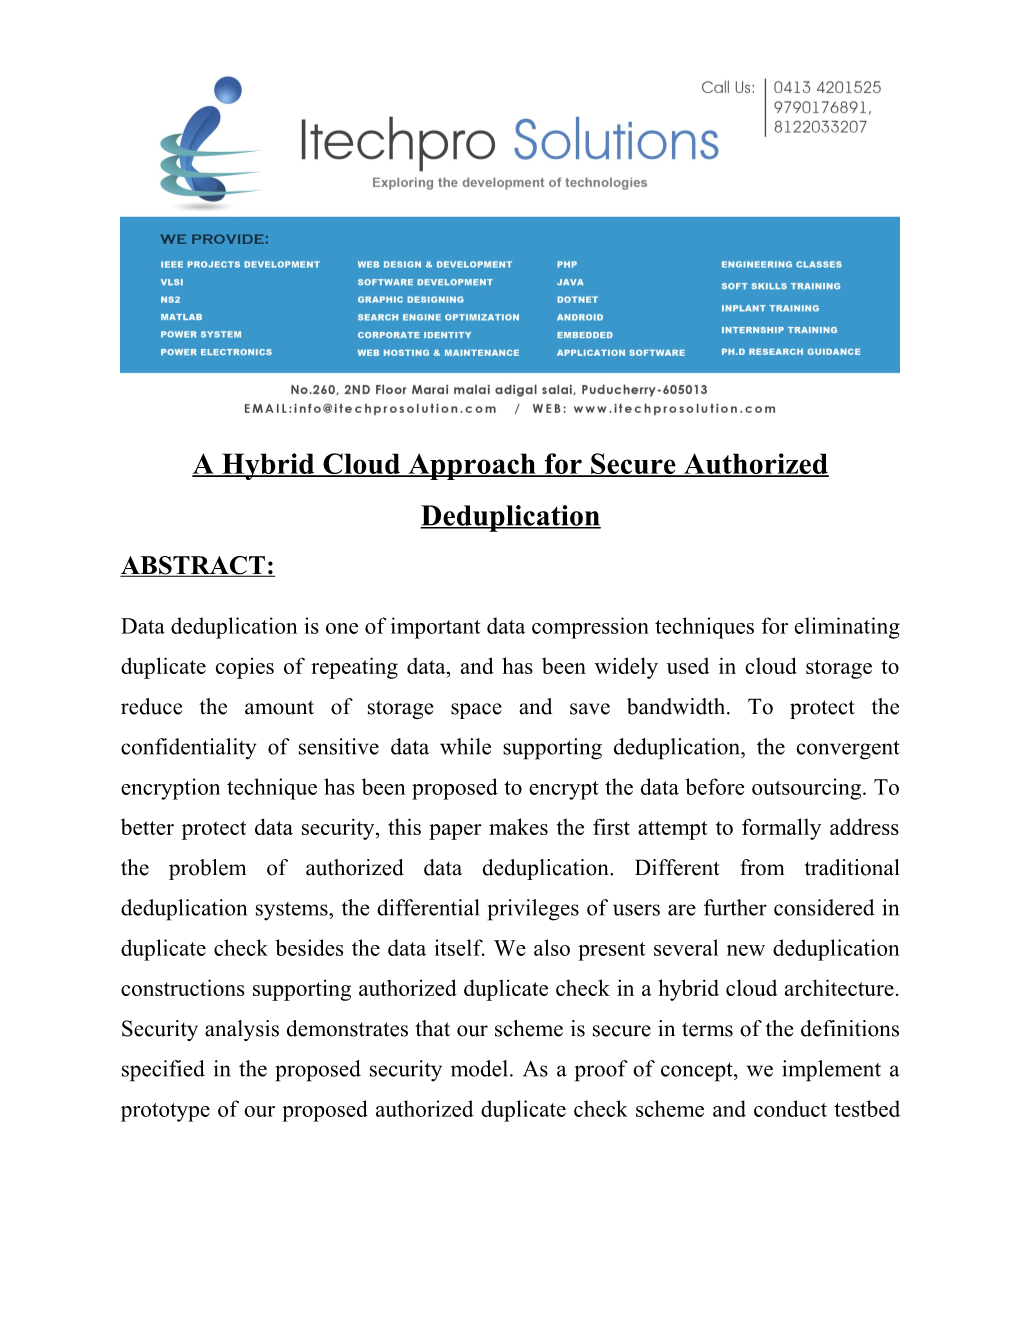 A Hybrid Cloud Approach for Secure Authorizeddeduplication